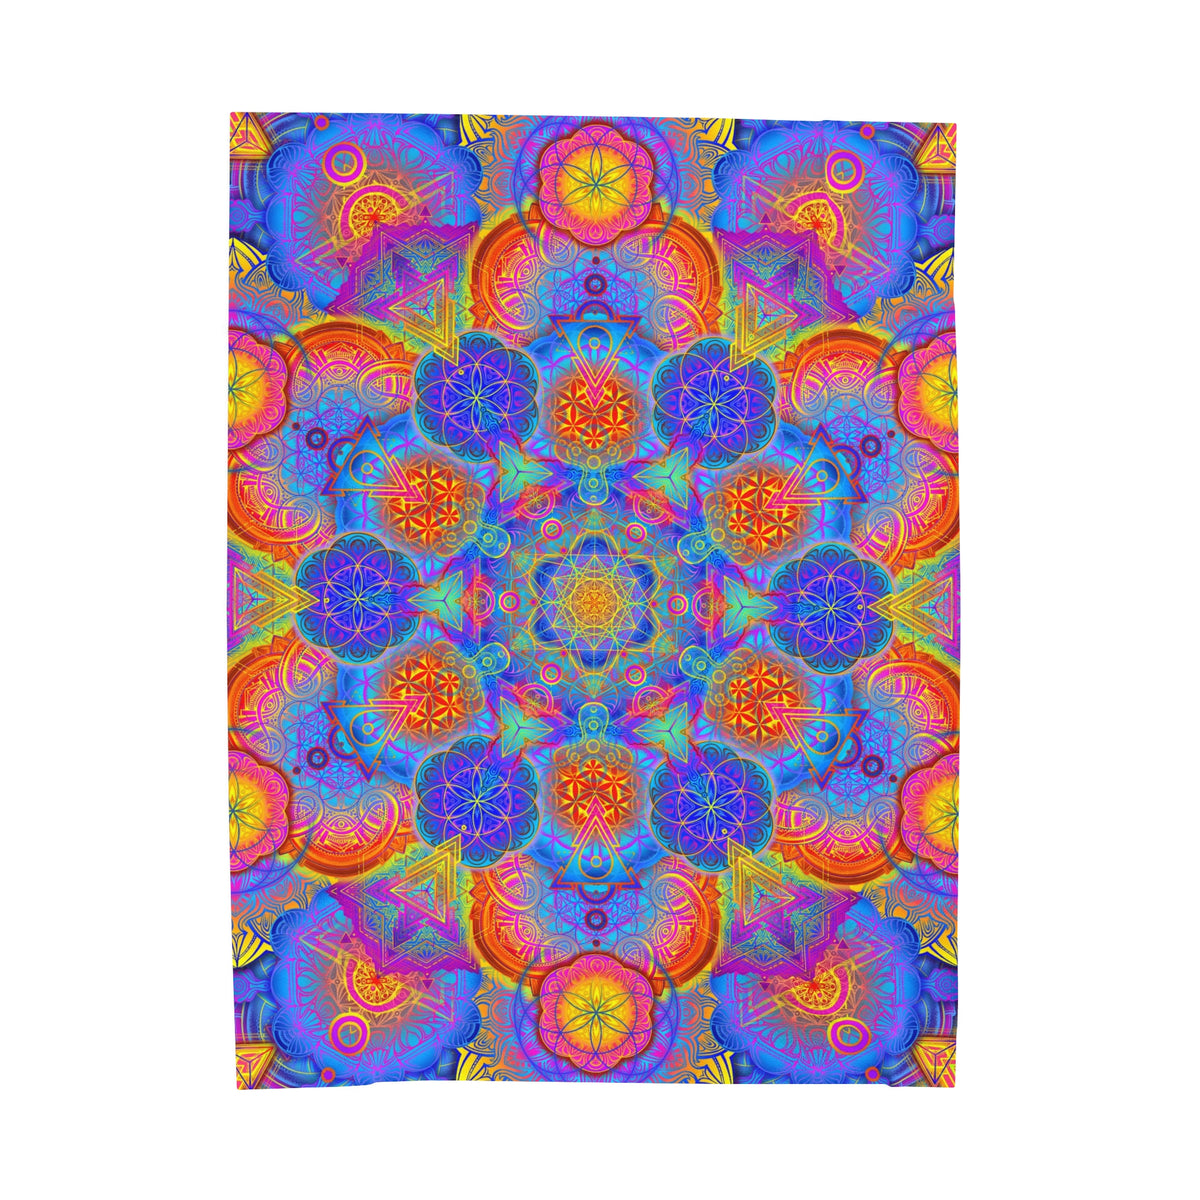 Psychedelic Metatron's Cube Mandala - Velveteen Plush Blanket